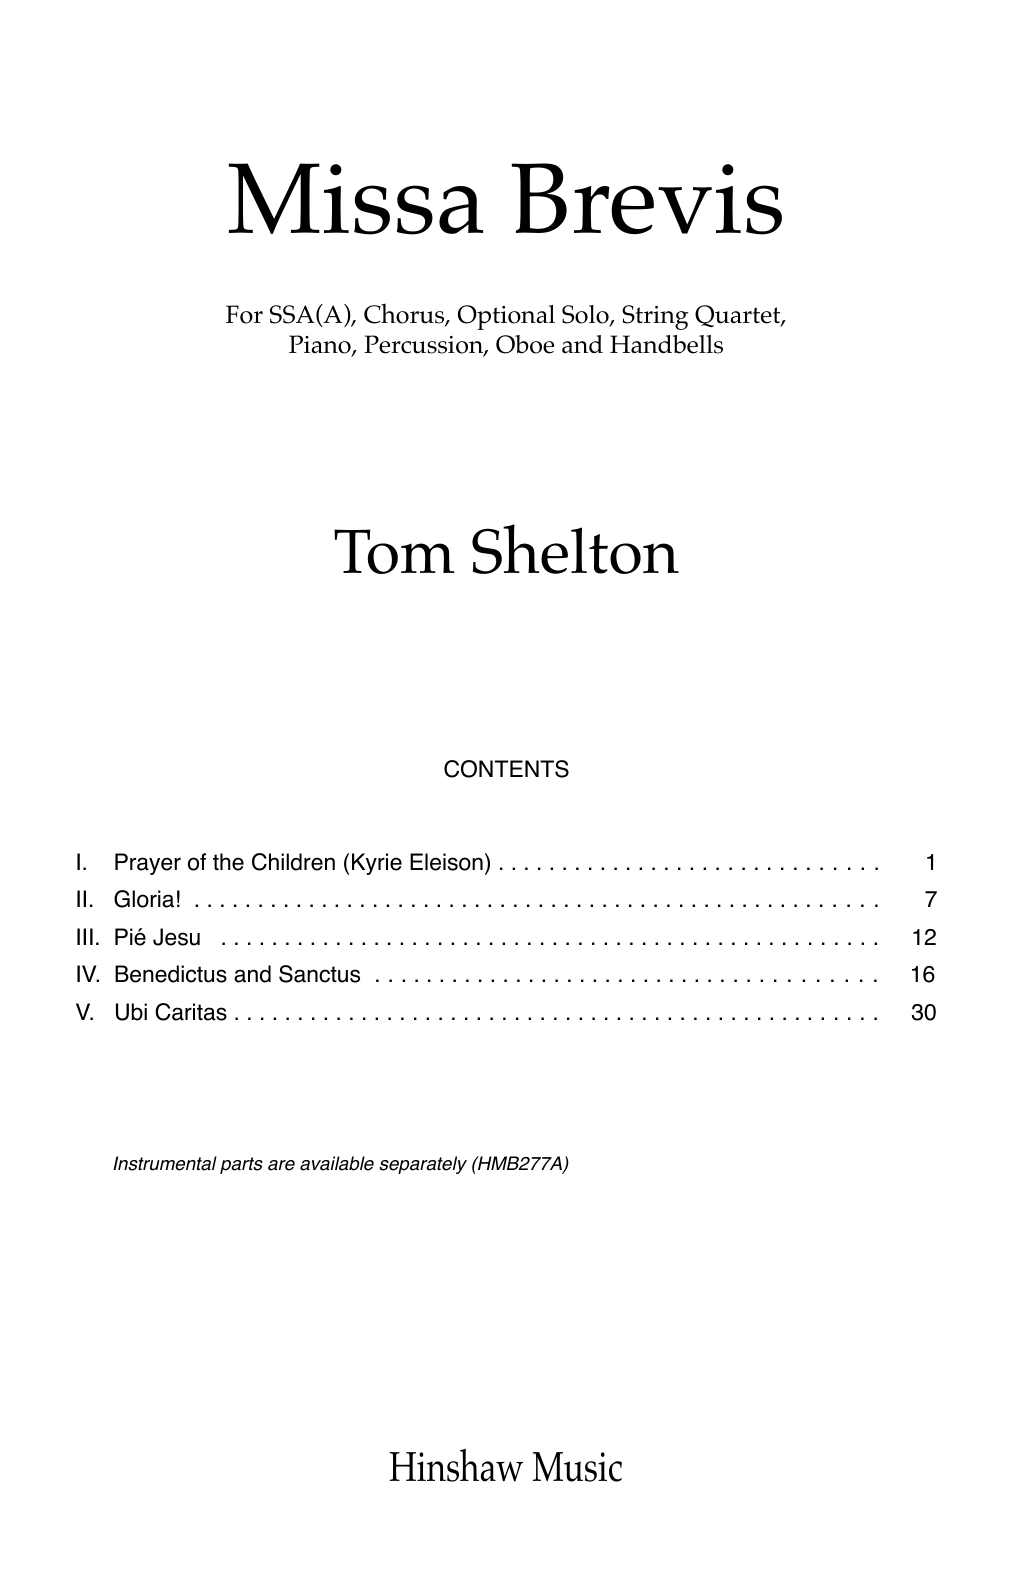 Tom Shelton Missa Brevis Sheet Music Notes & Chords for SSA Choir - Download or Print PDF